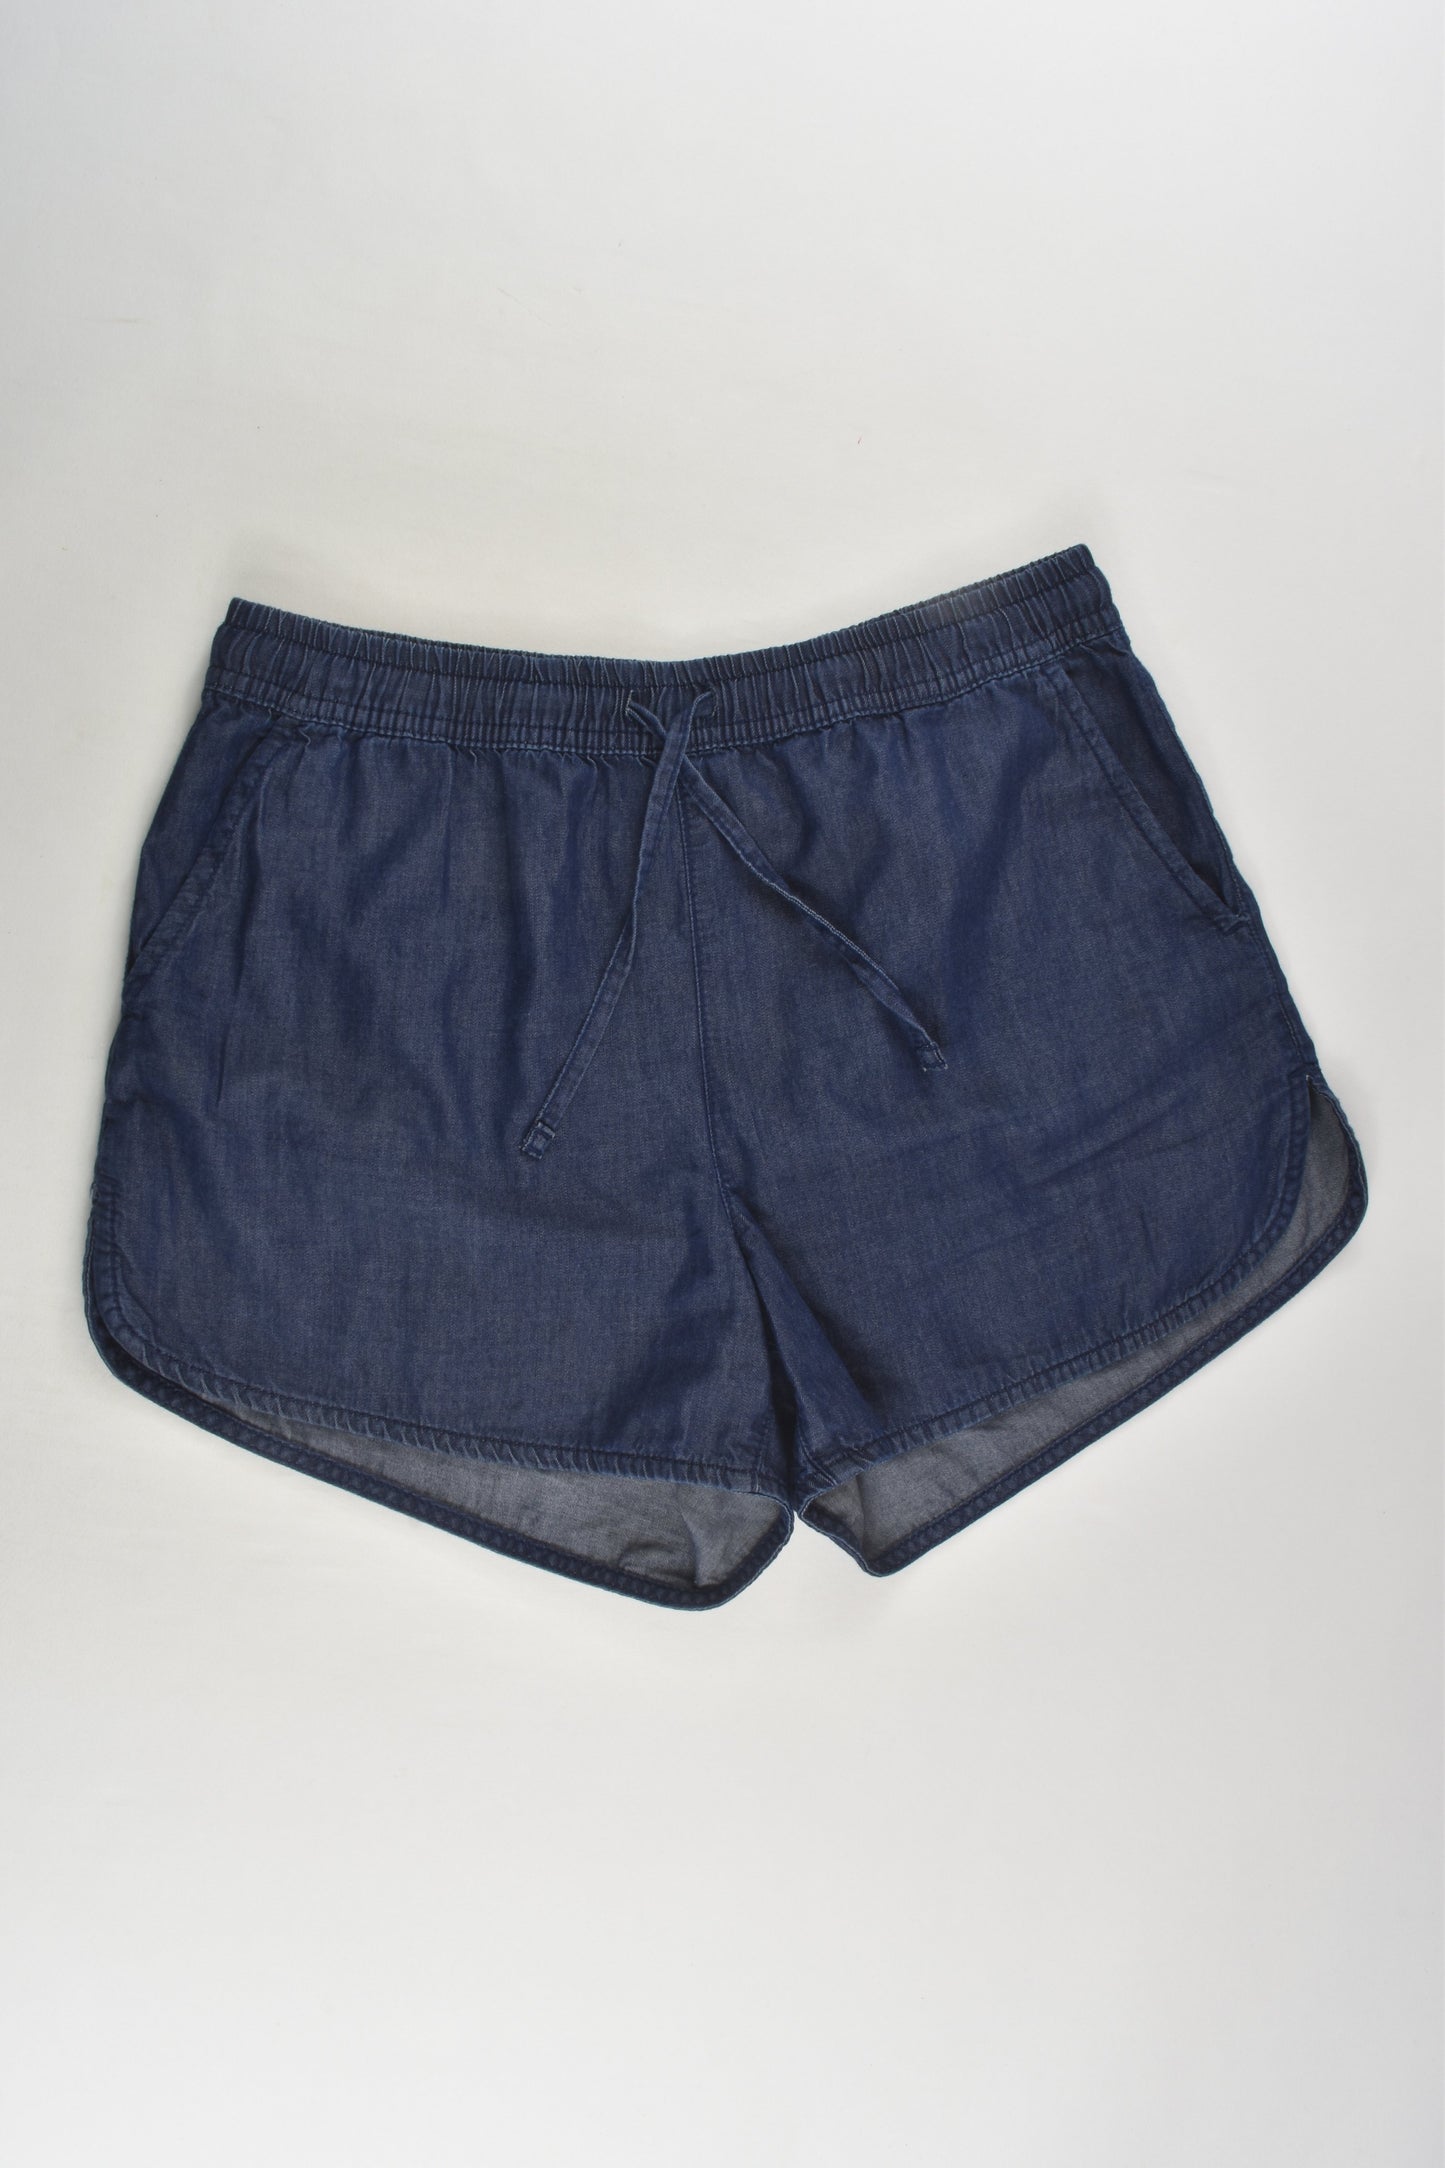 Tilii Size 14 Lightweight Denim Shorts